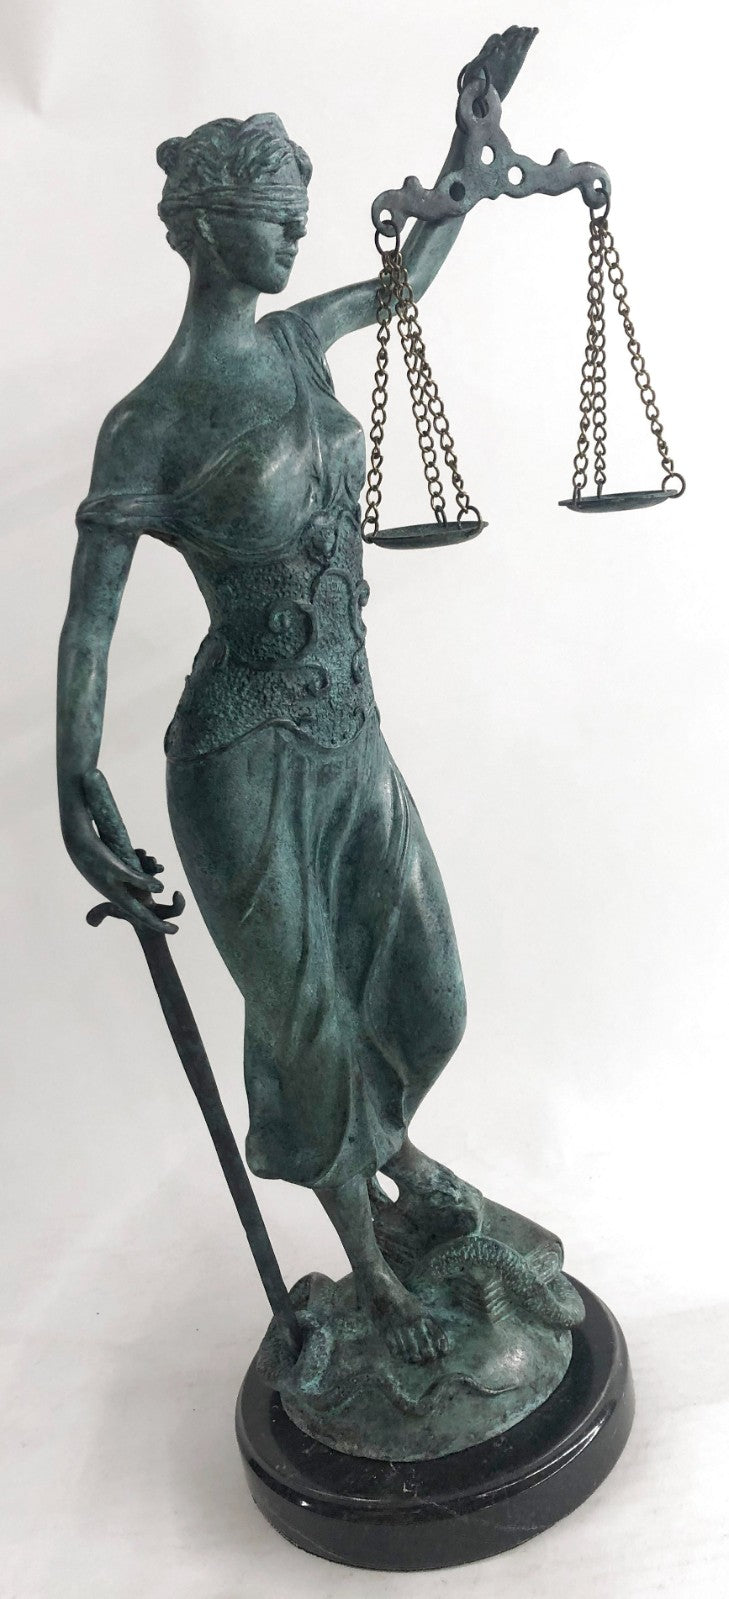 Hand Made Massive Blind Justice Law Office Decoration Bronze Sculpture Figure